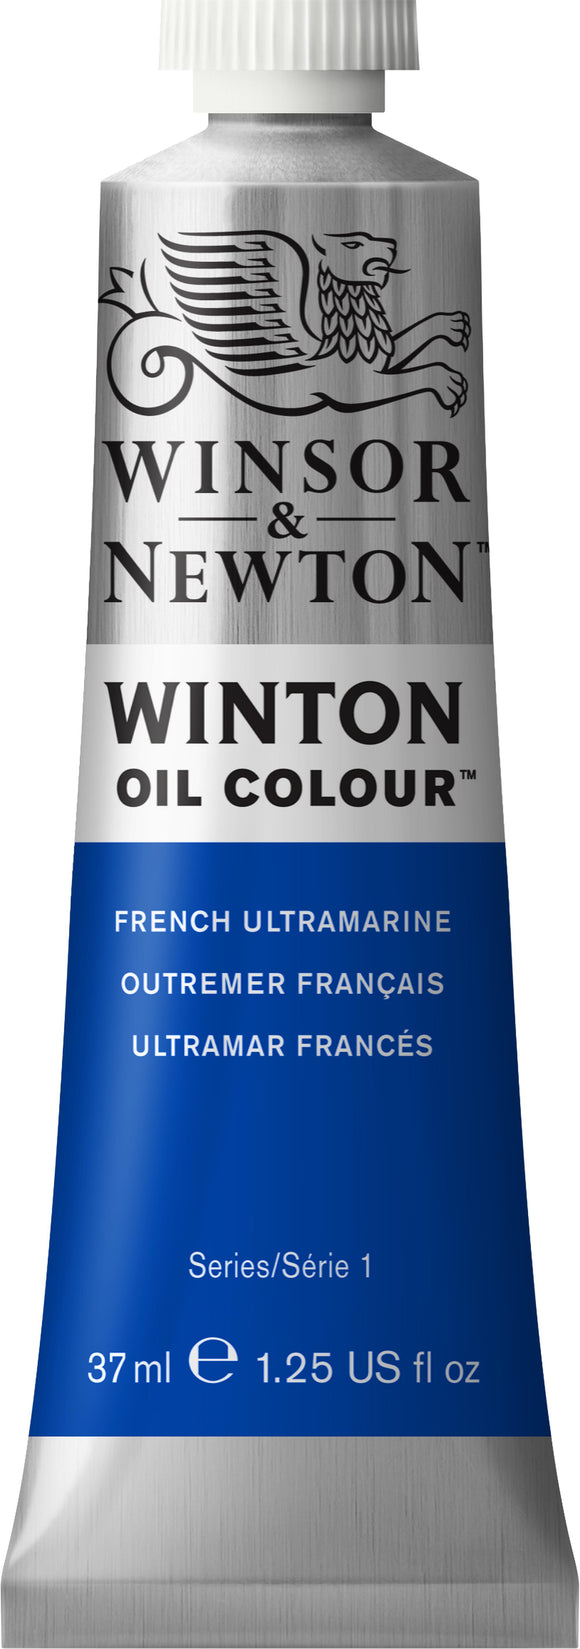 Winsor & Newton Winton Oil Colour French Ultramarine 37Ml